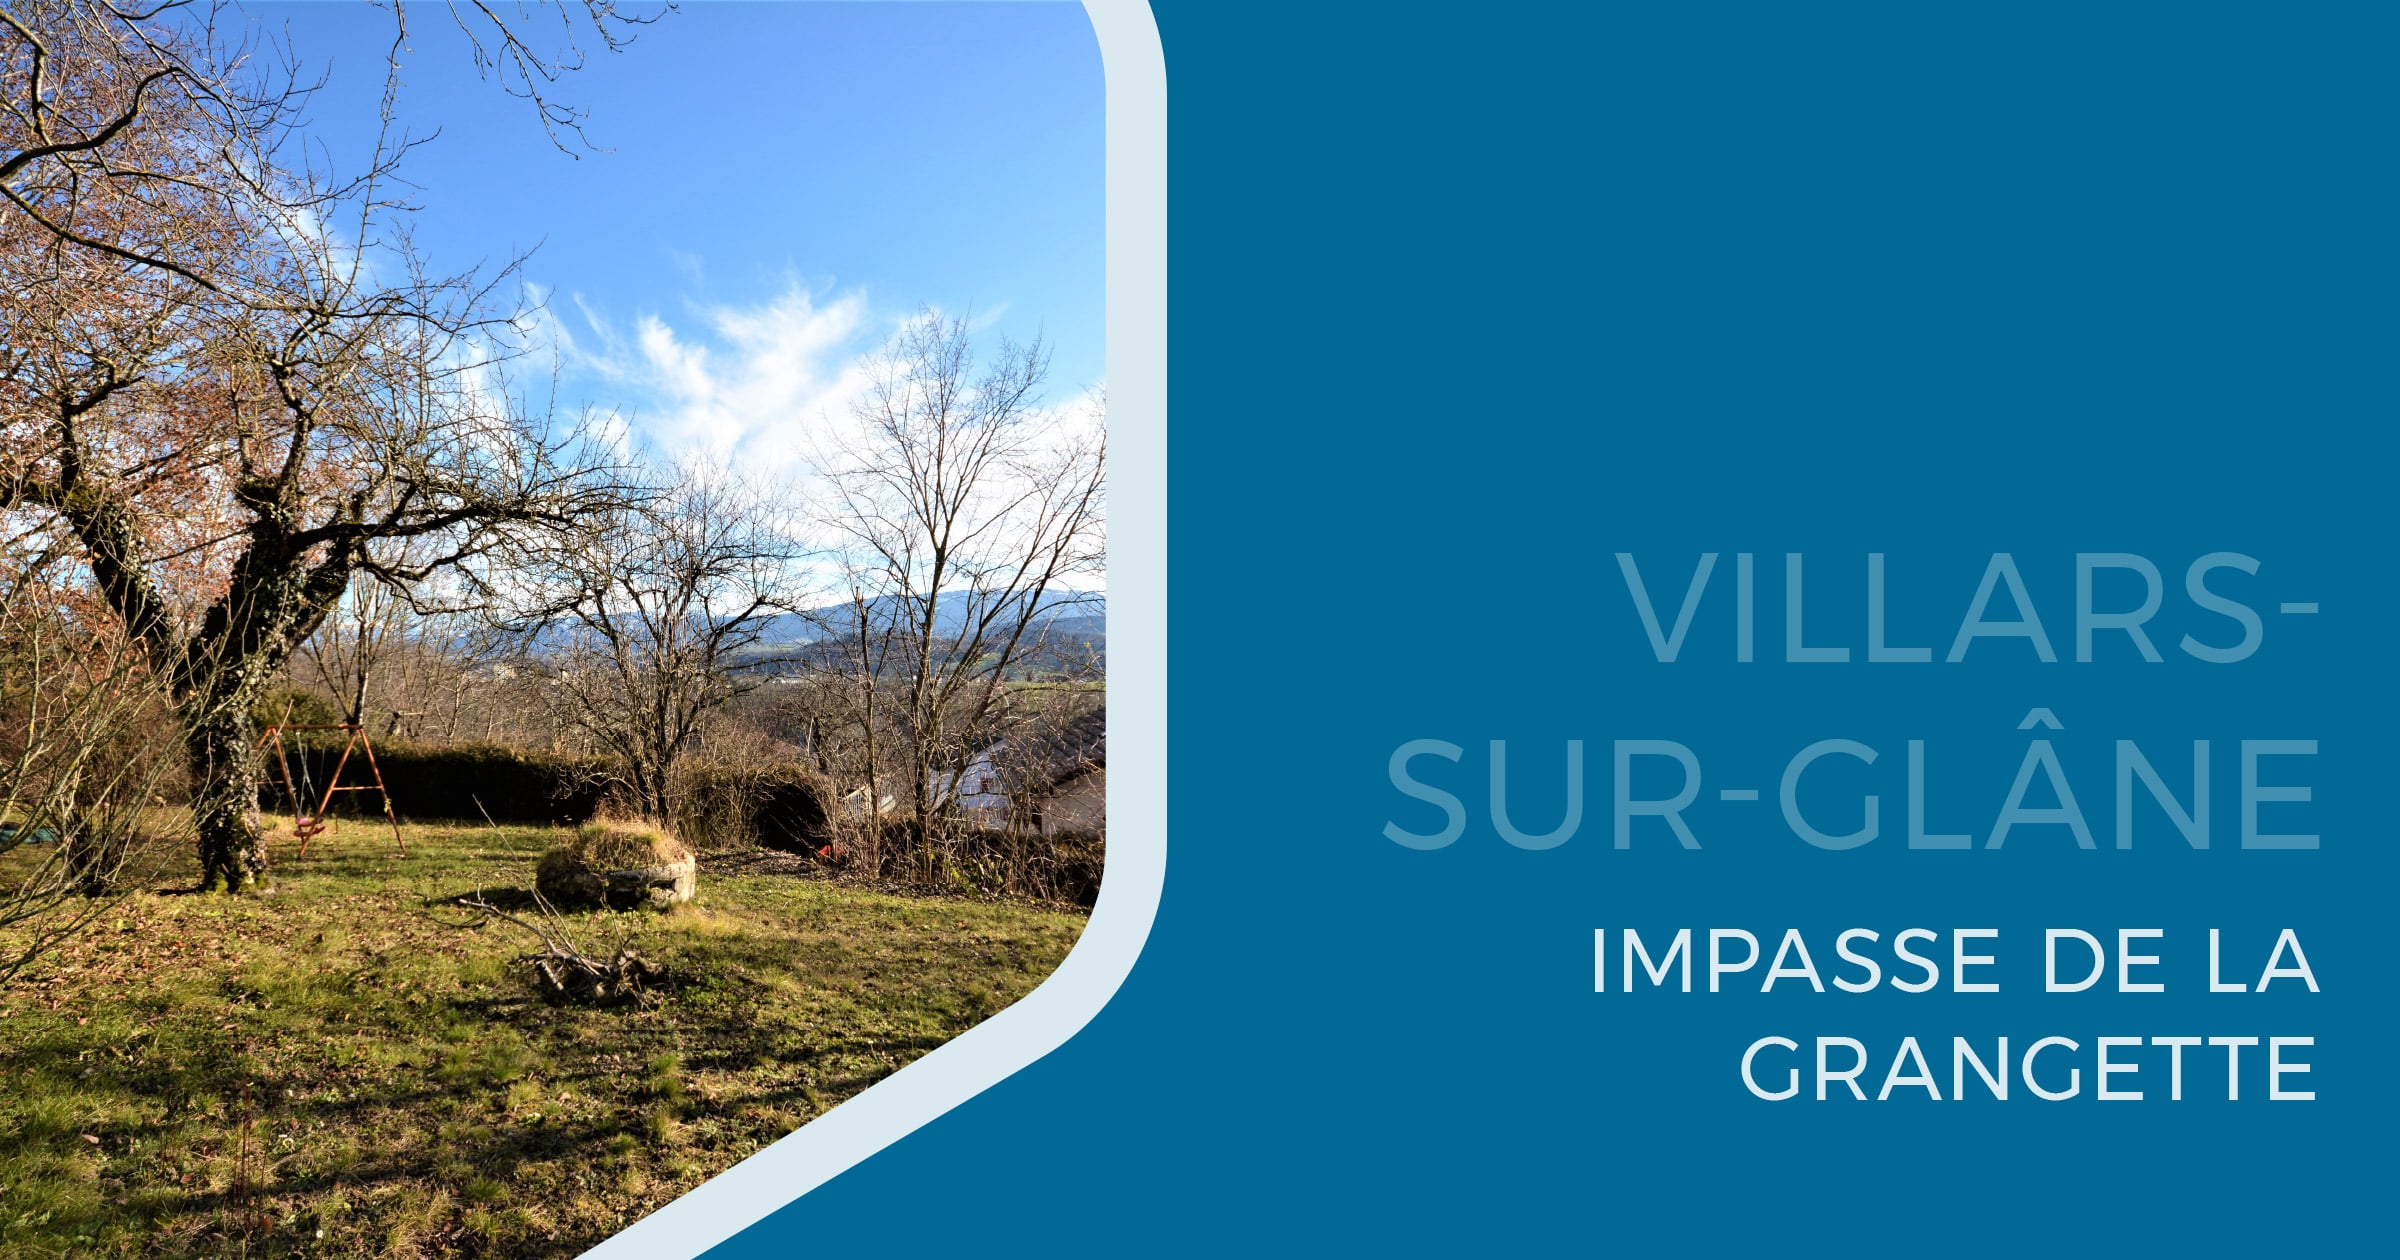 Villars-sur-Glâne, Impasse de la Grangette